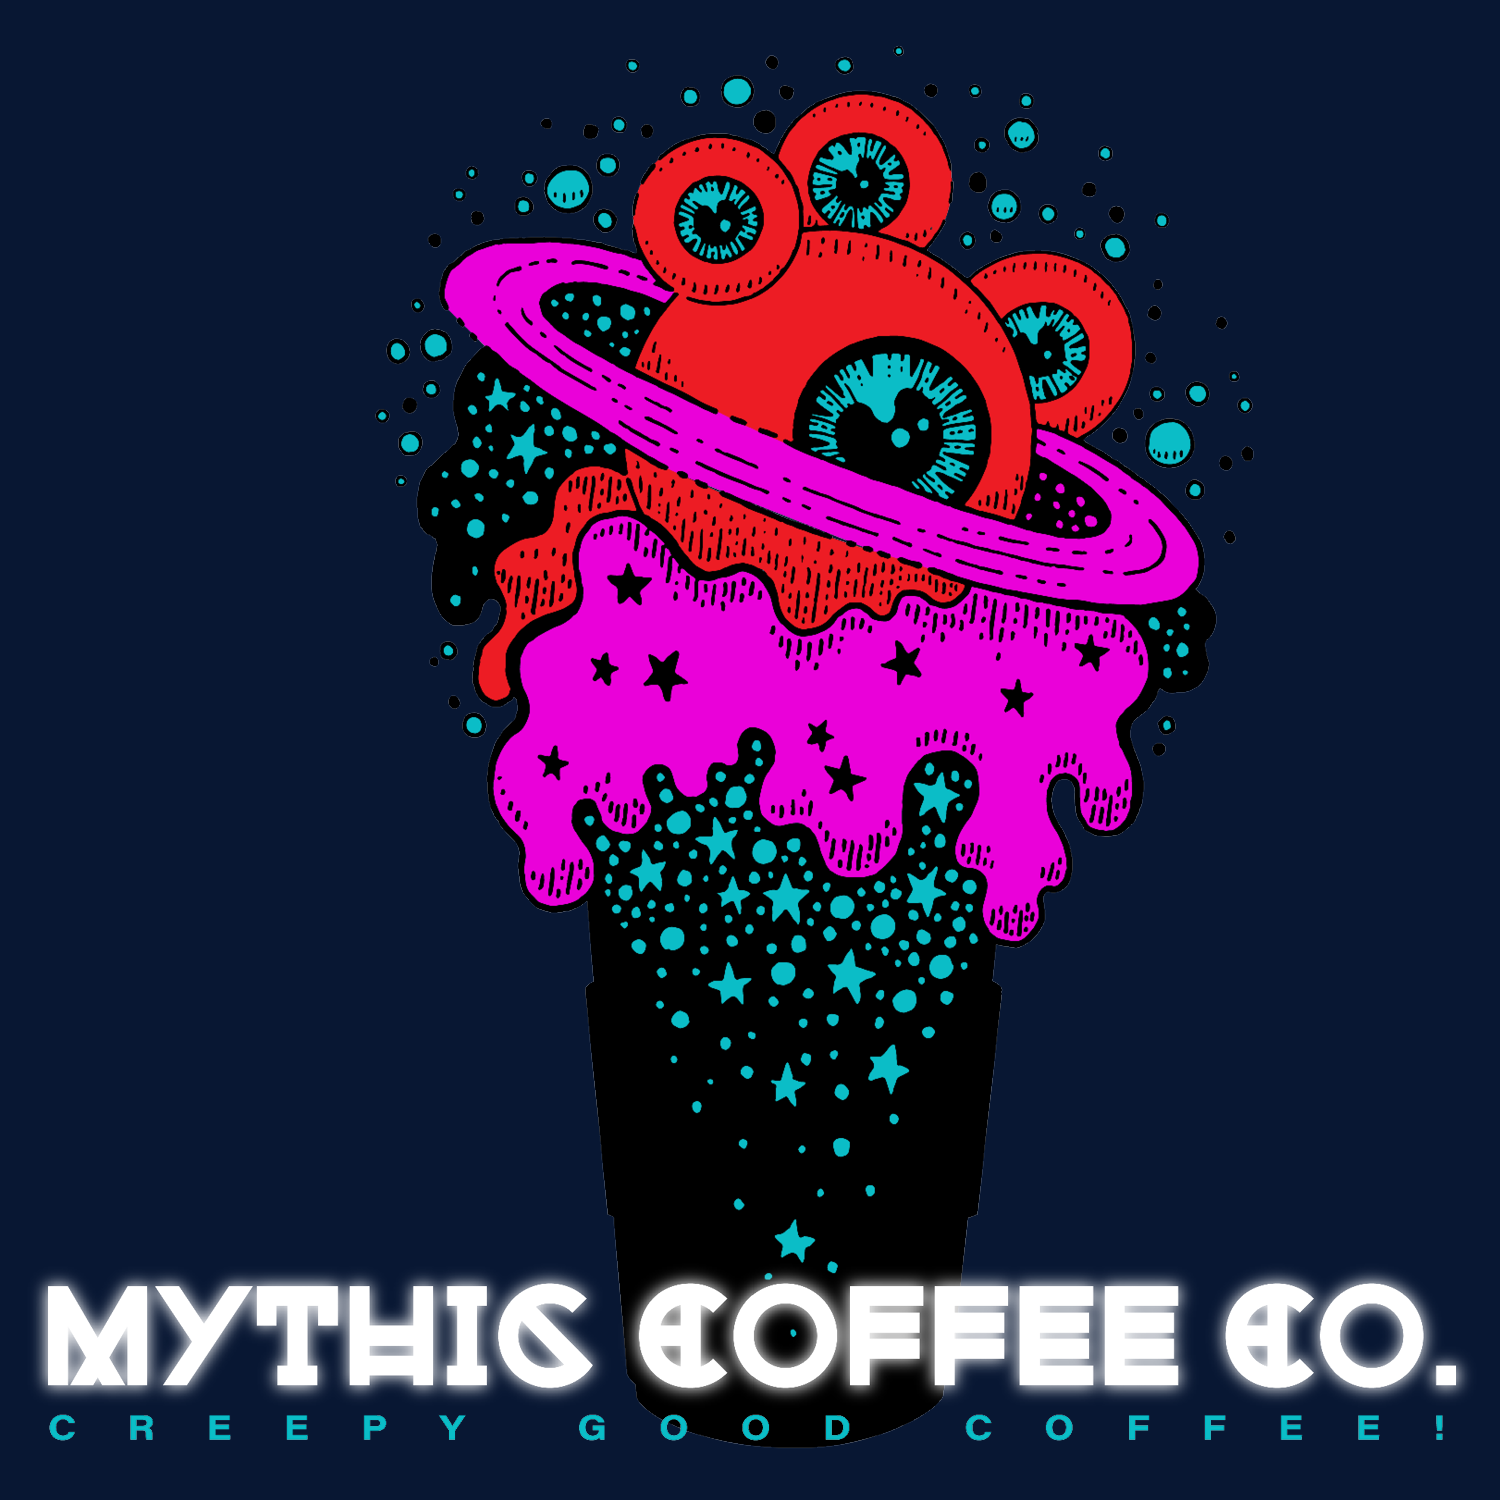 Mythic Coffee Co